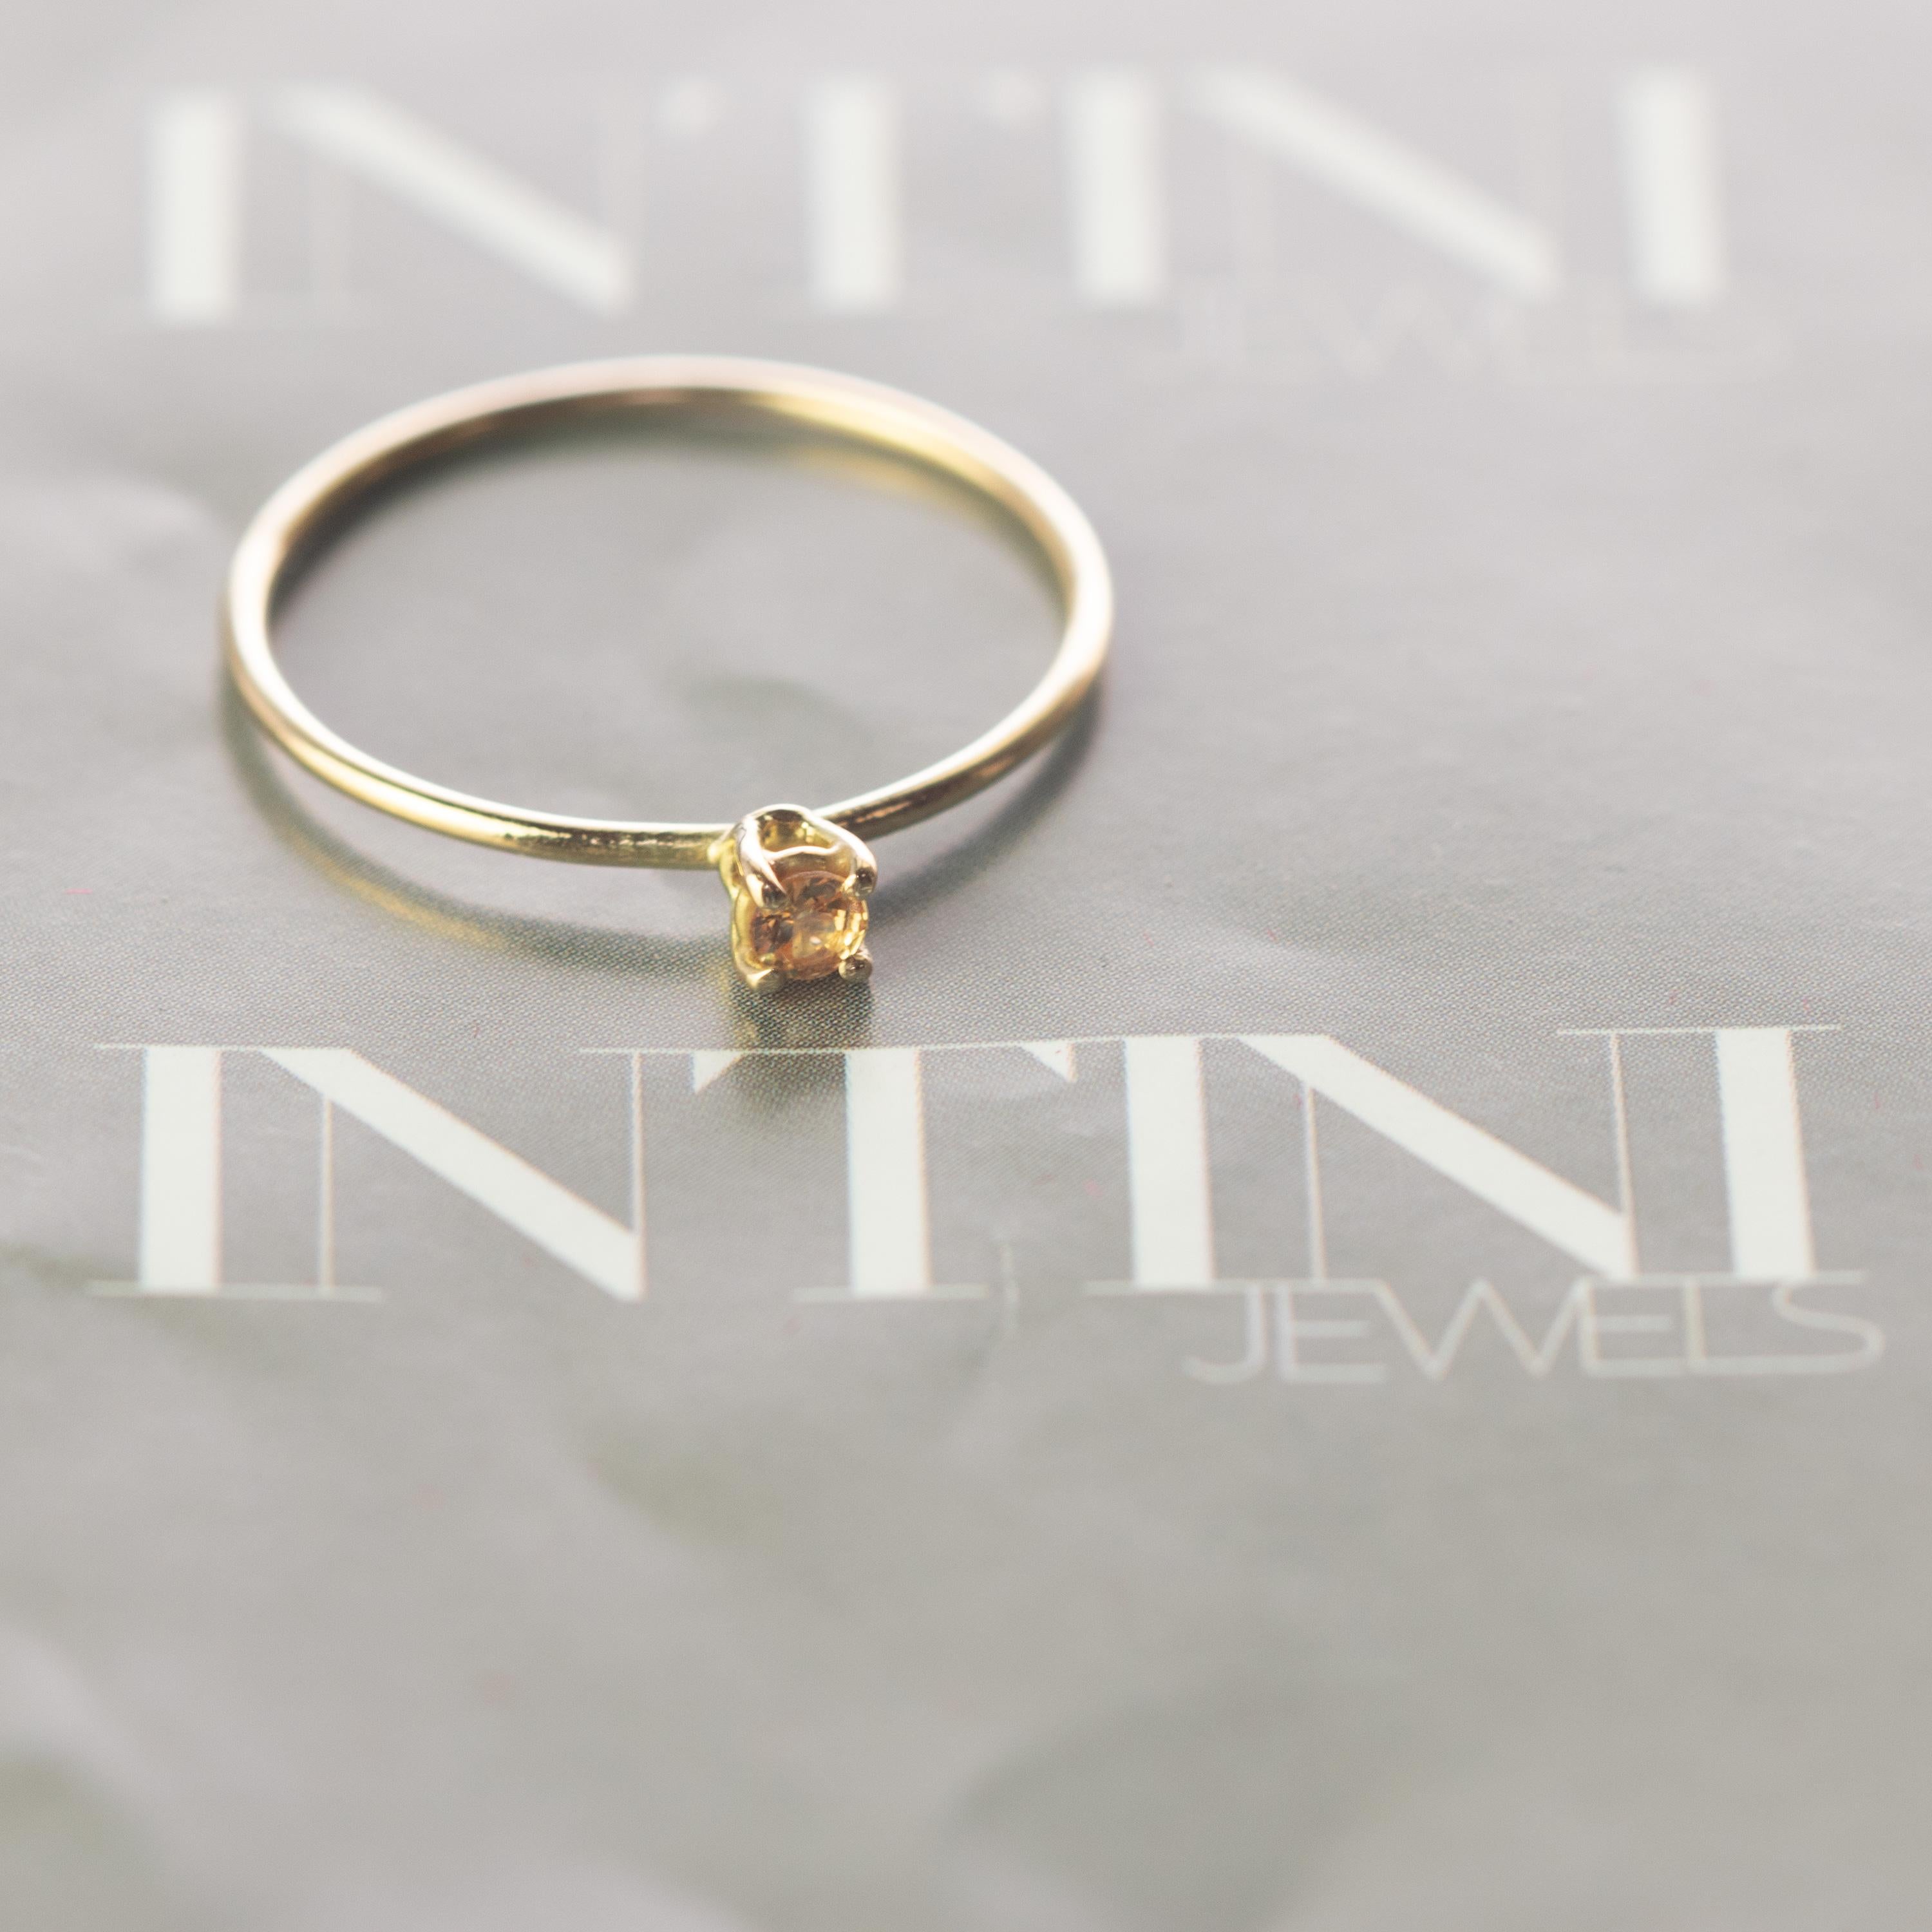 Brilliant Cut Intini Jewels Sapphire Yellow 14 Karat Gold Band Handmade Modern Chic Ring For Sale